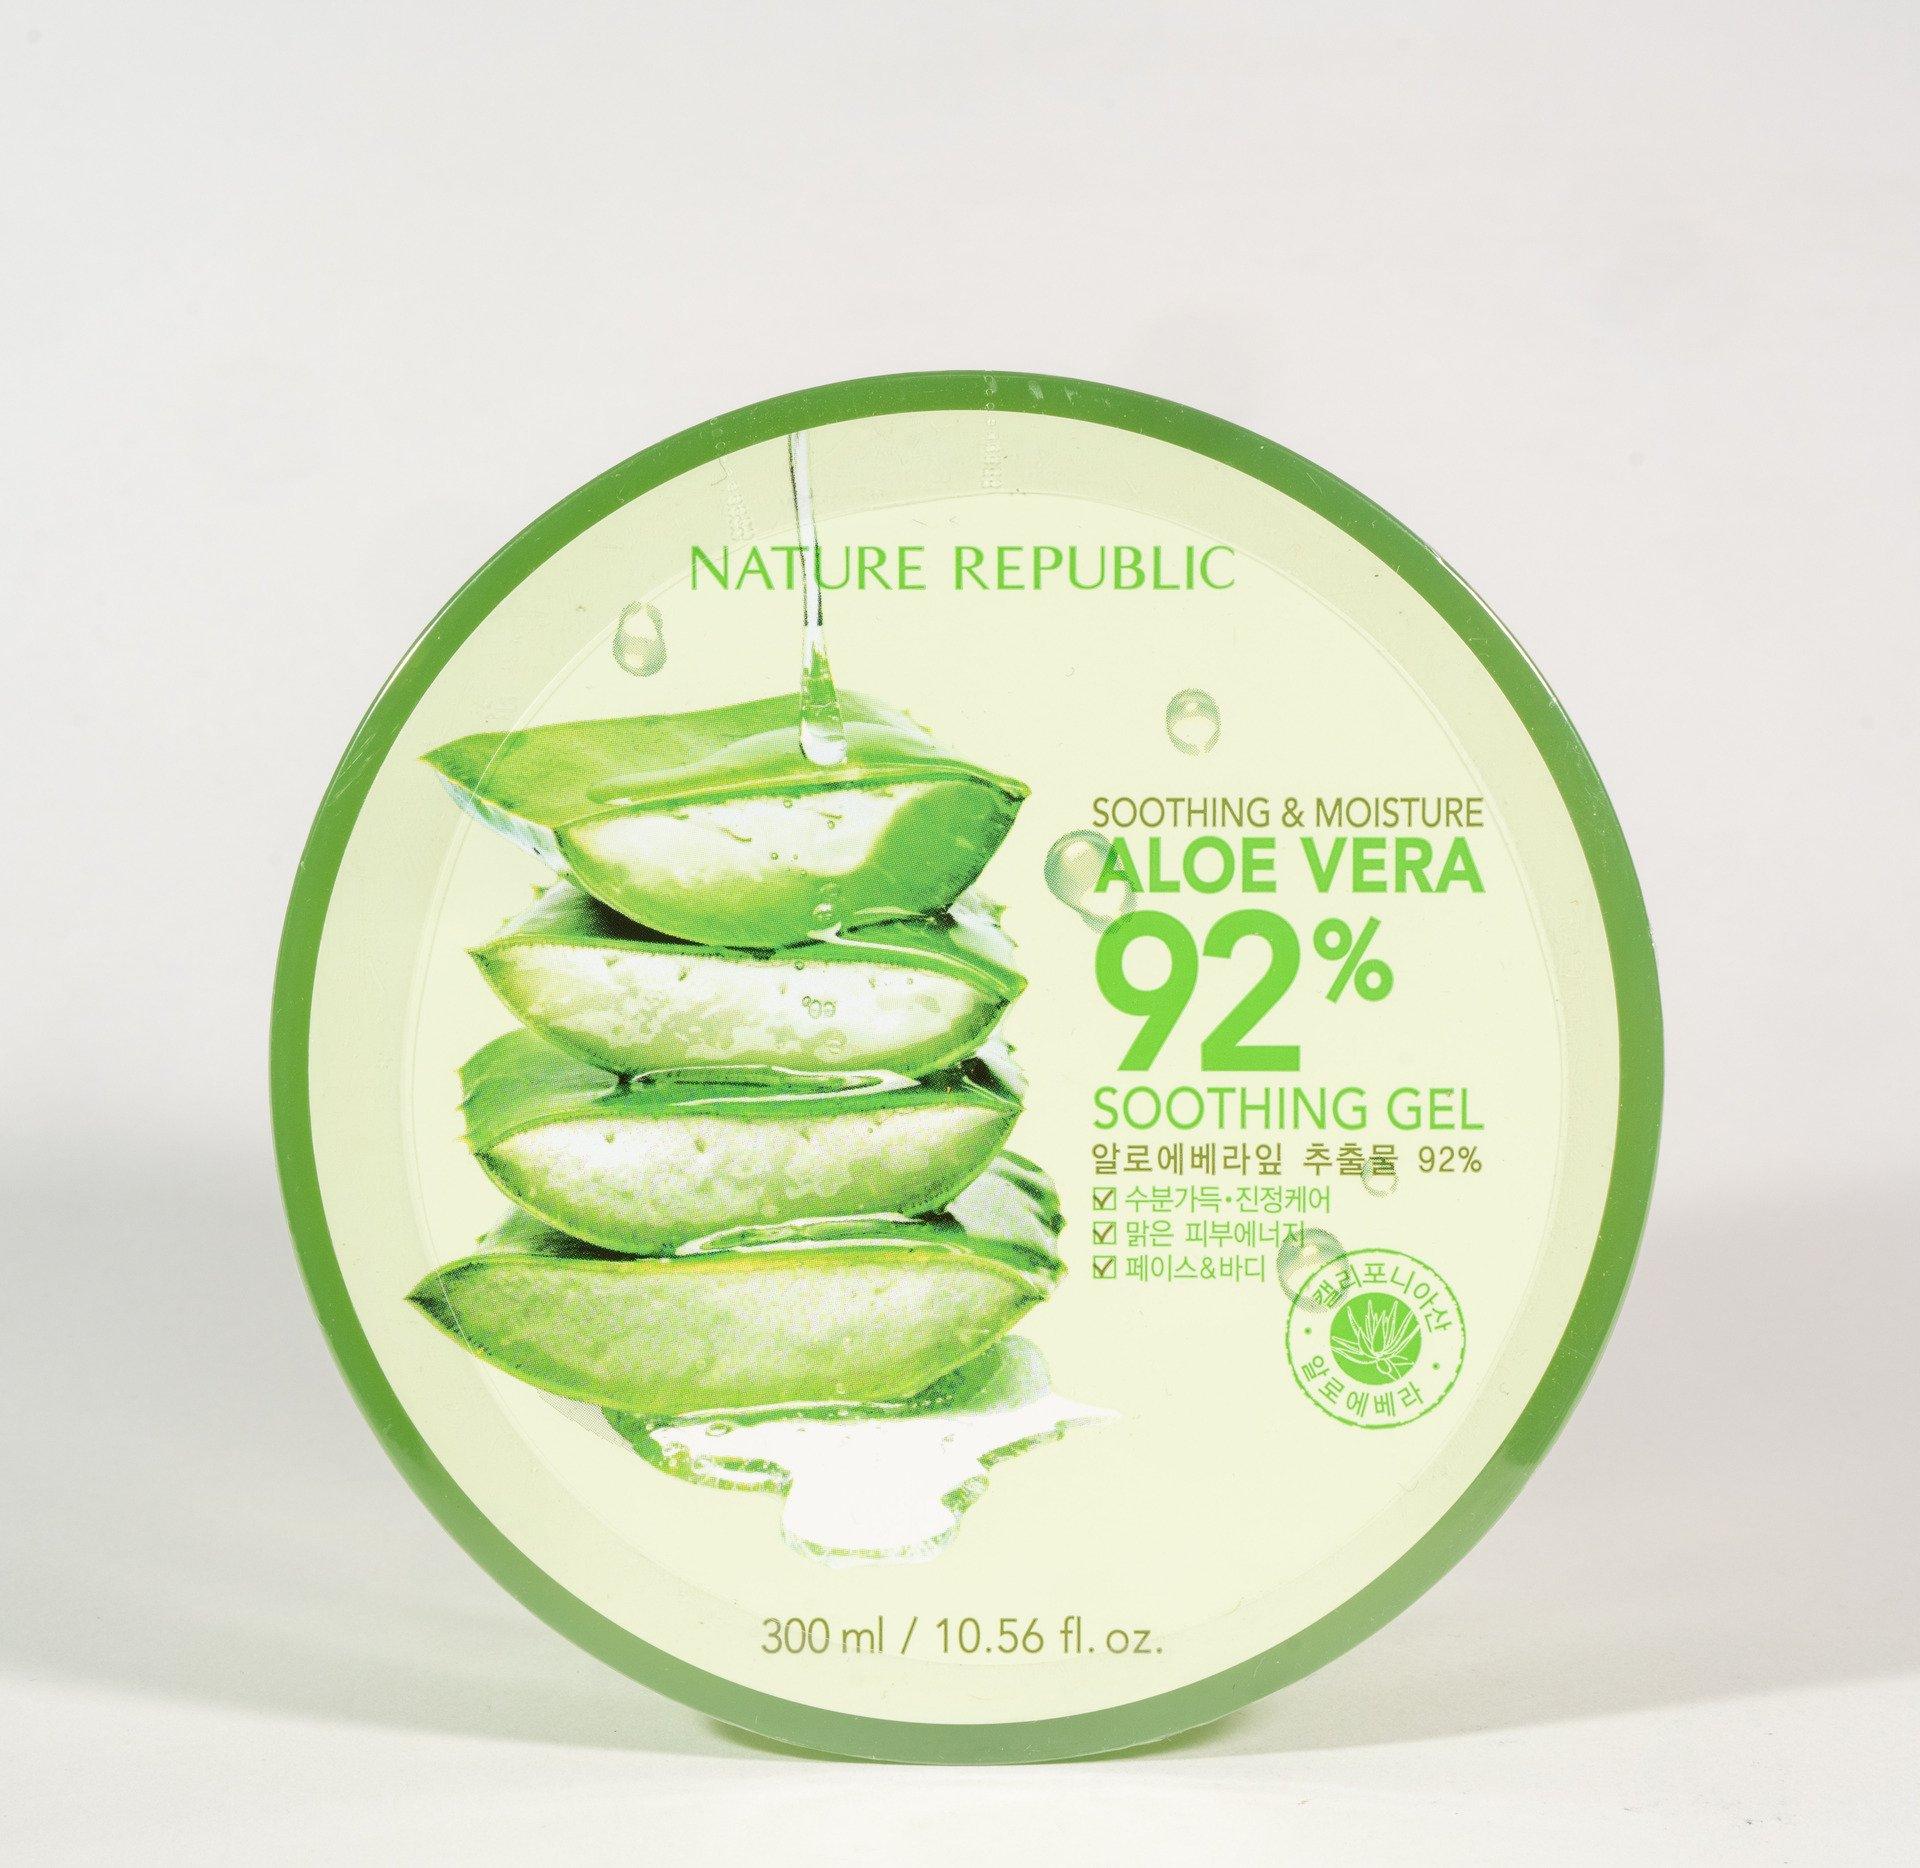 NATURE REPUBLIC Soothing & Moisture Aloe Vera 92% Soothing Gel 300ml